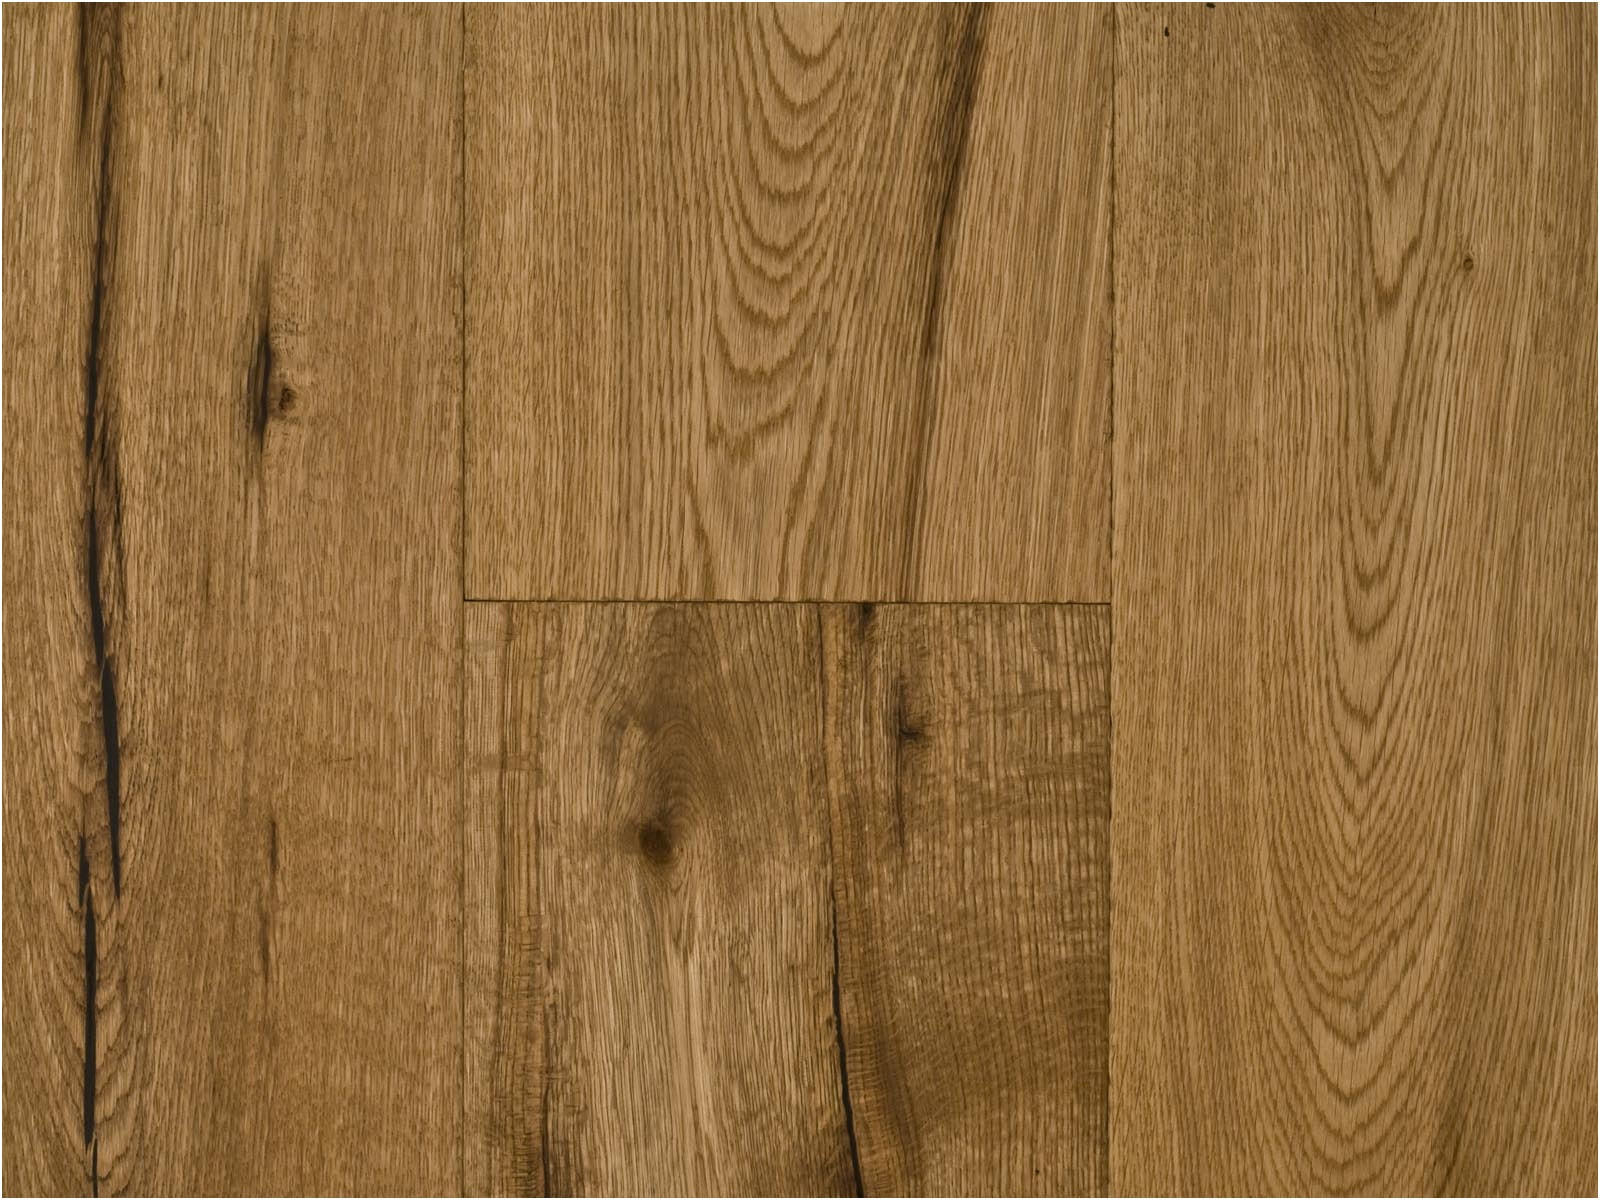 8 wide plank hardwood flooring of wide plank french oak flooring elegant duchateau hardwood flooring regarding wide plank french oak flooring elegant duchateau hardwood flooring houston tx discount engineered wood